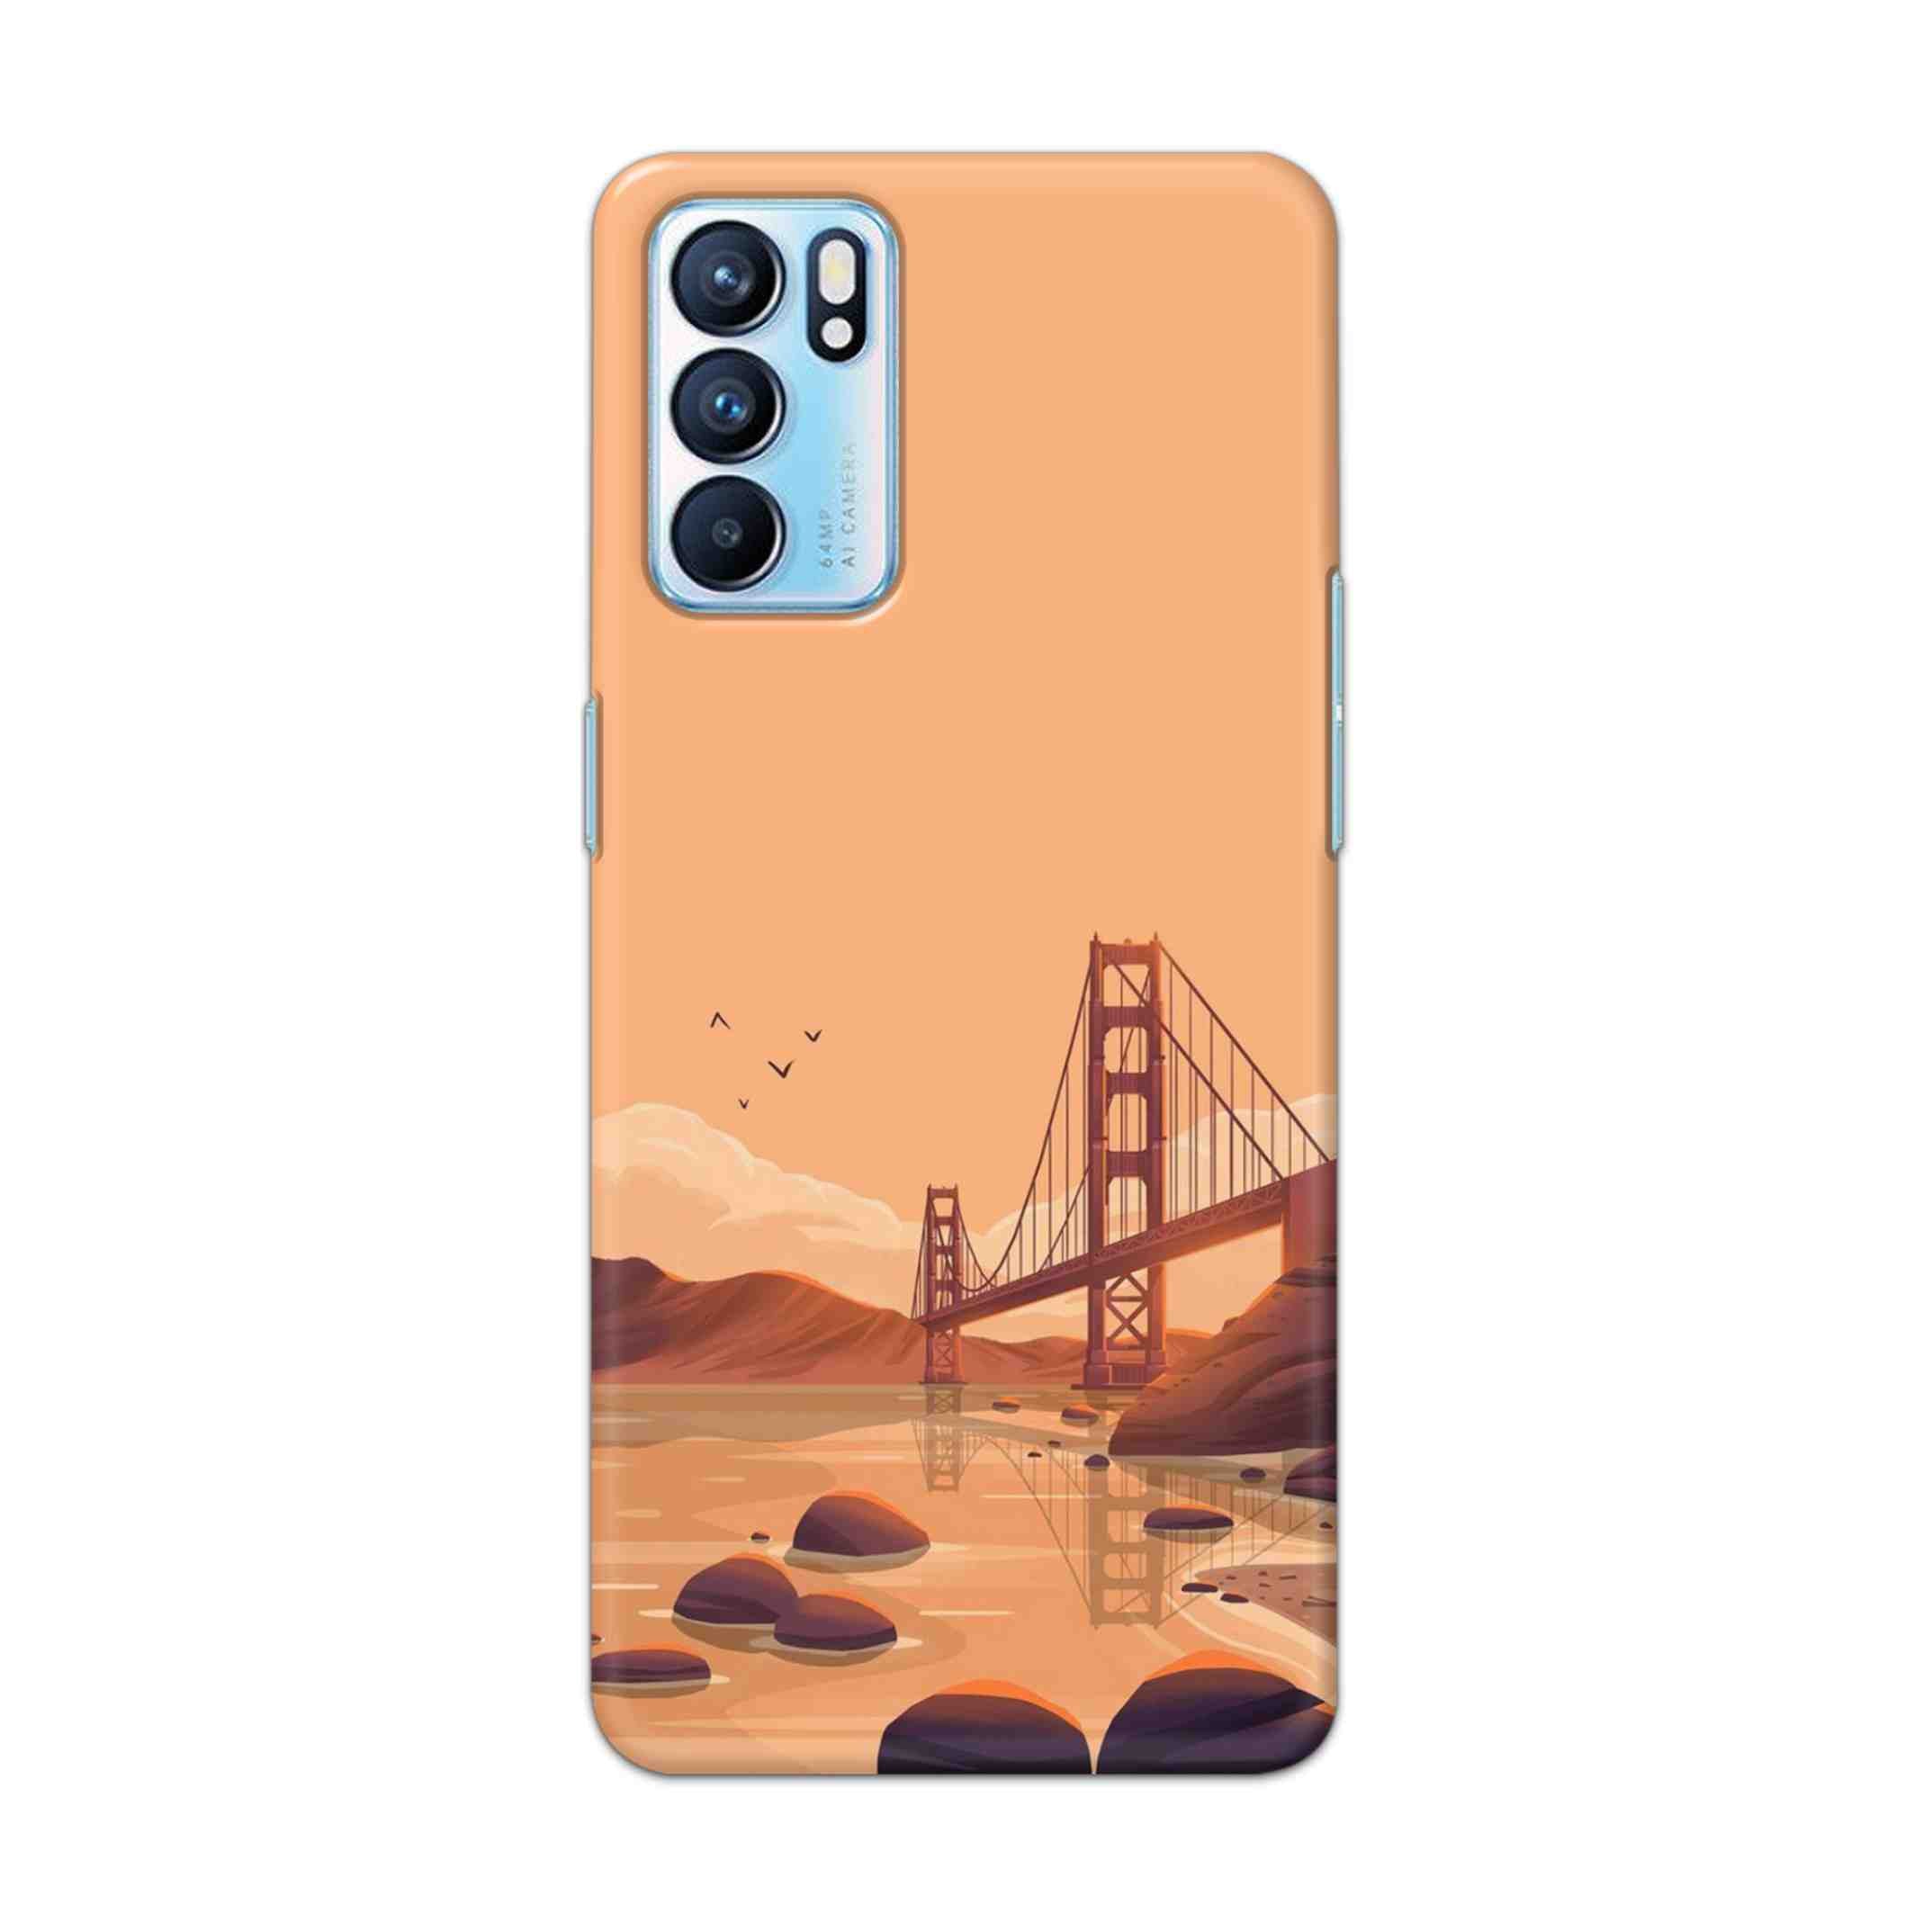 Buy San Francisco Hard Back Mobile Phone Case Cover For OPPO RENO 6 Online